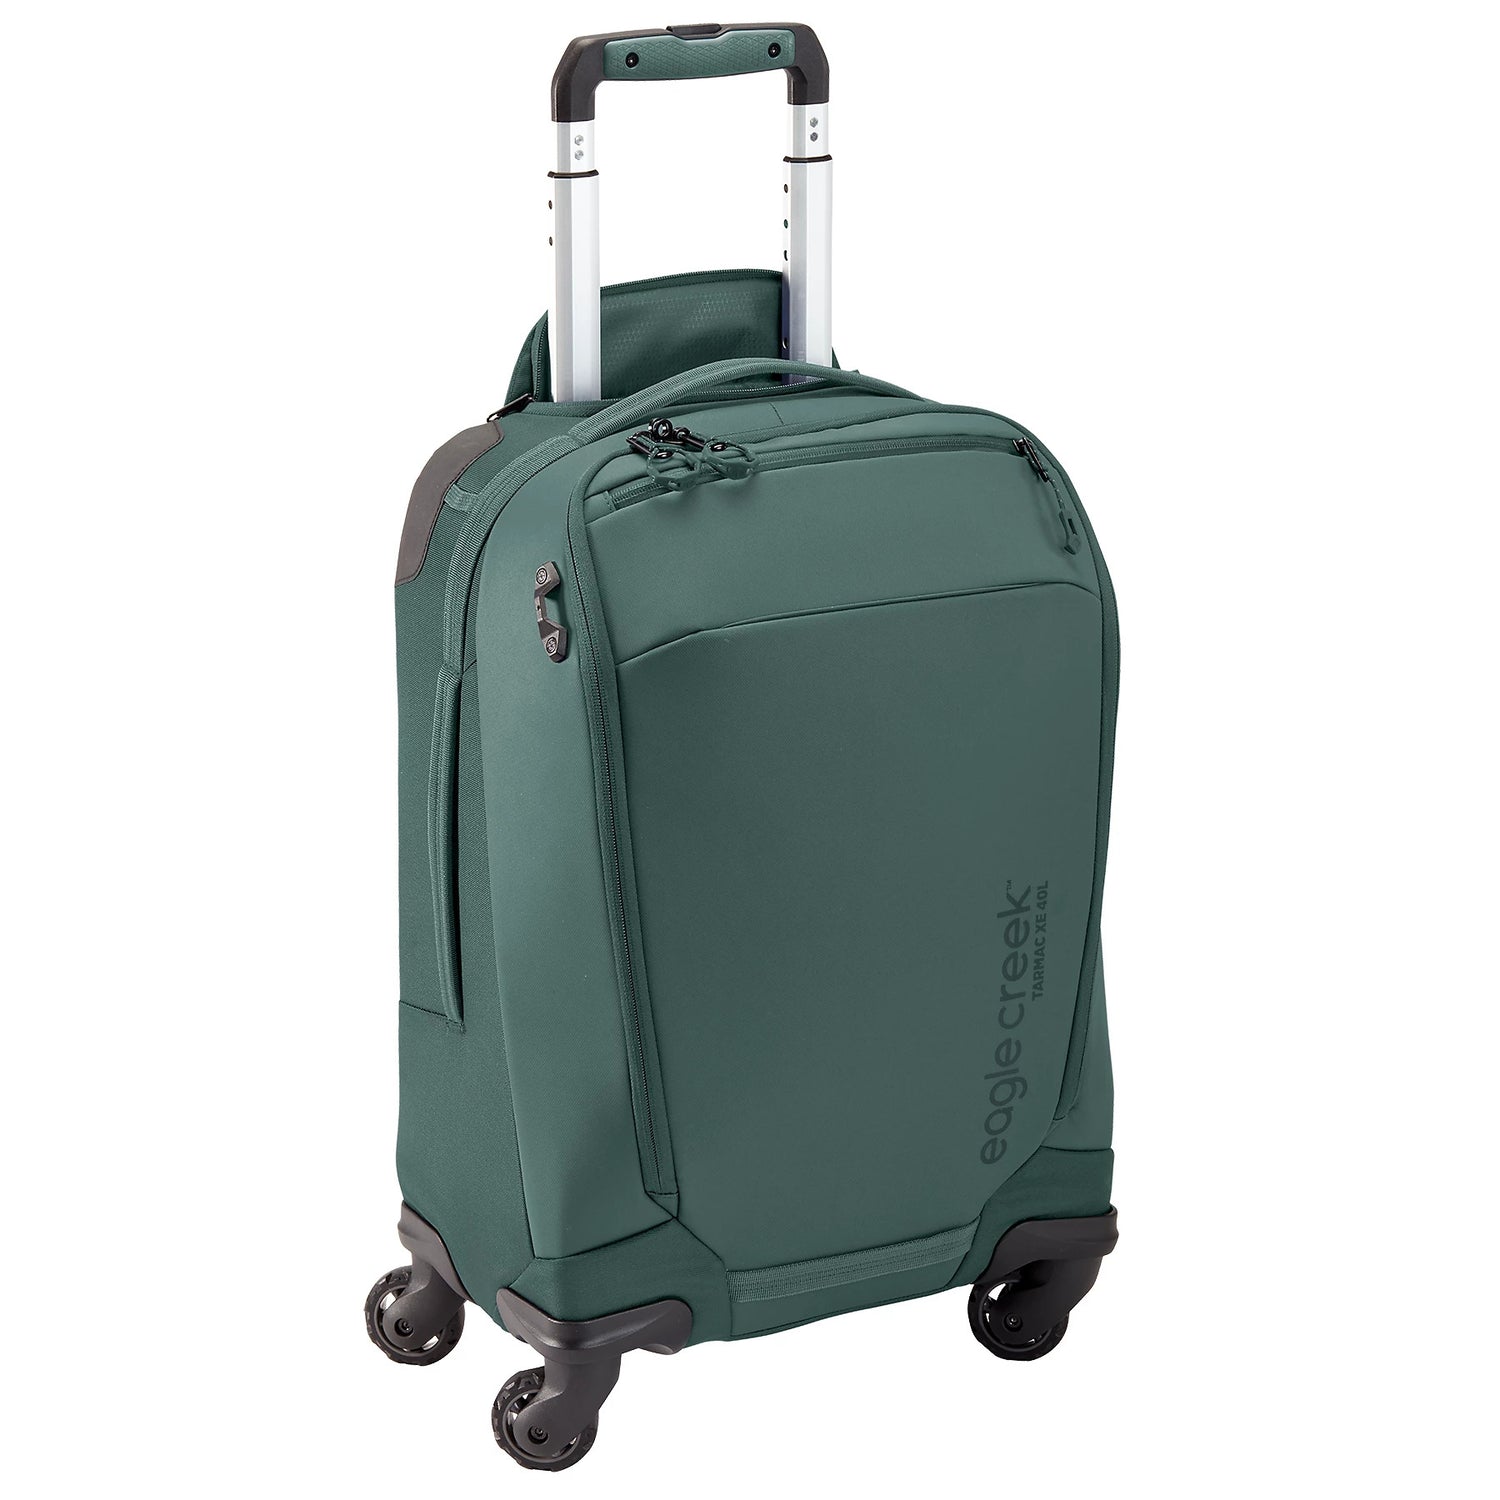 Tarmac XE 4-Wheel 22" Carry-On Luggage - ARCTIC SEAGREEN